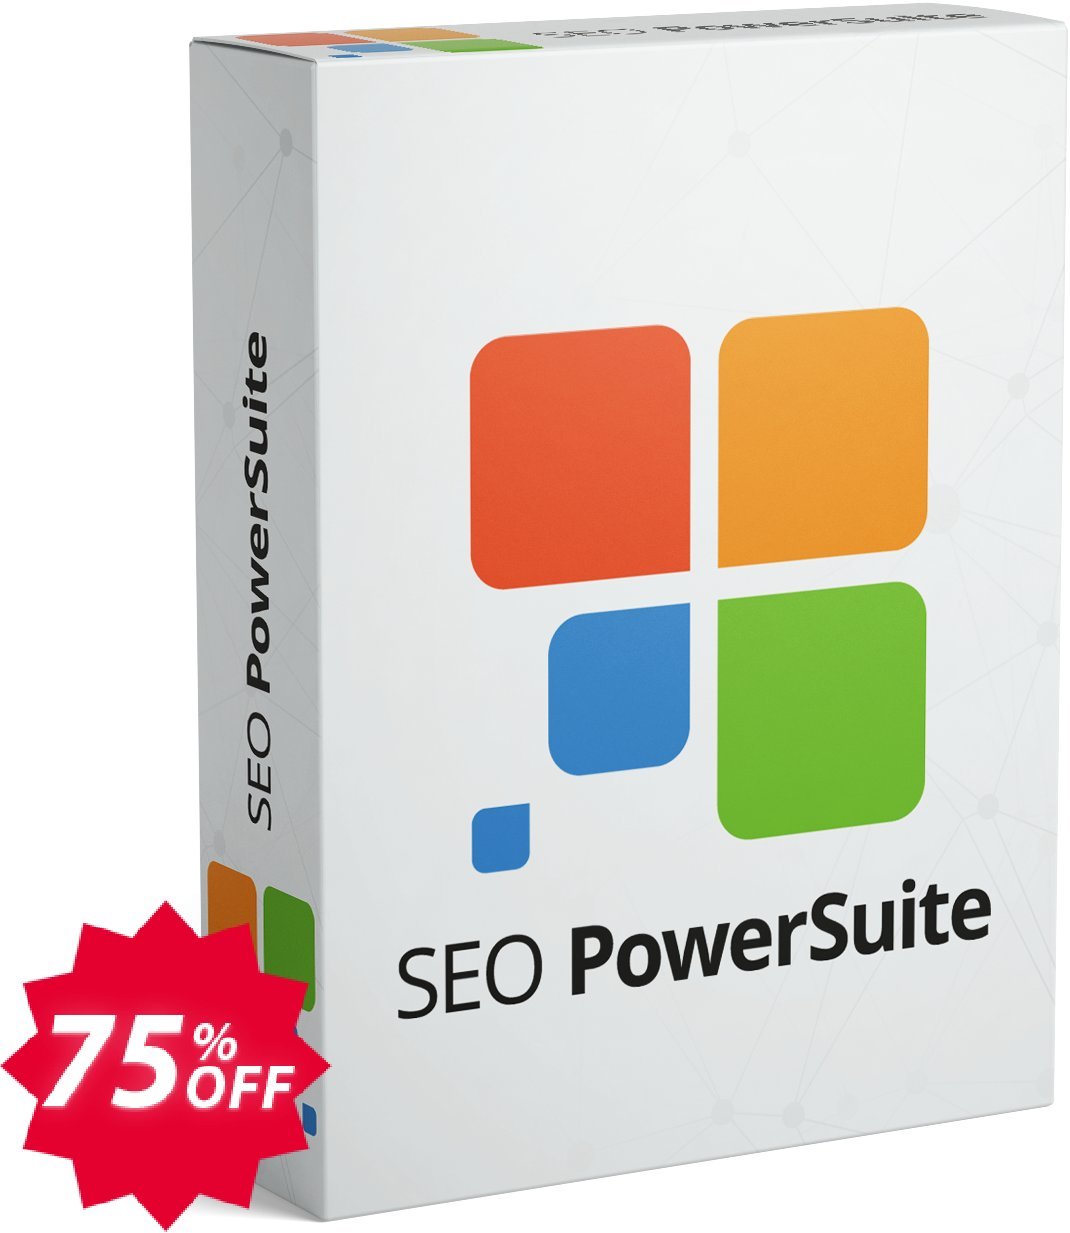 SEO PowerSuite Professional Coupon code 75% discount 